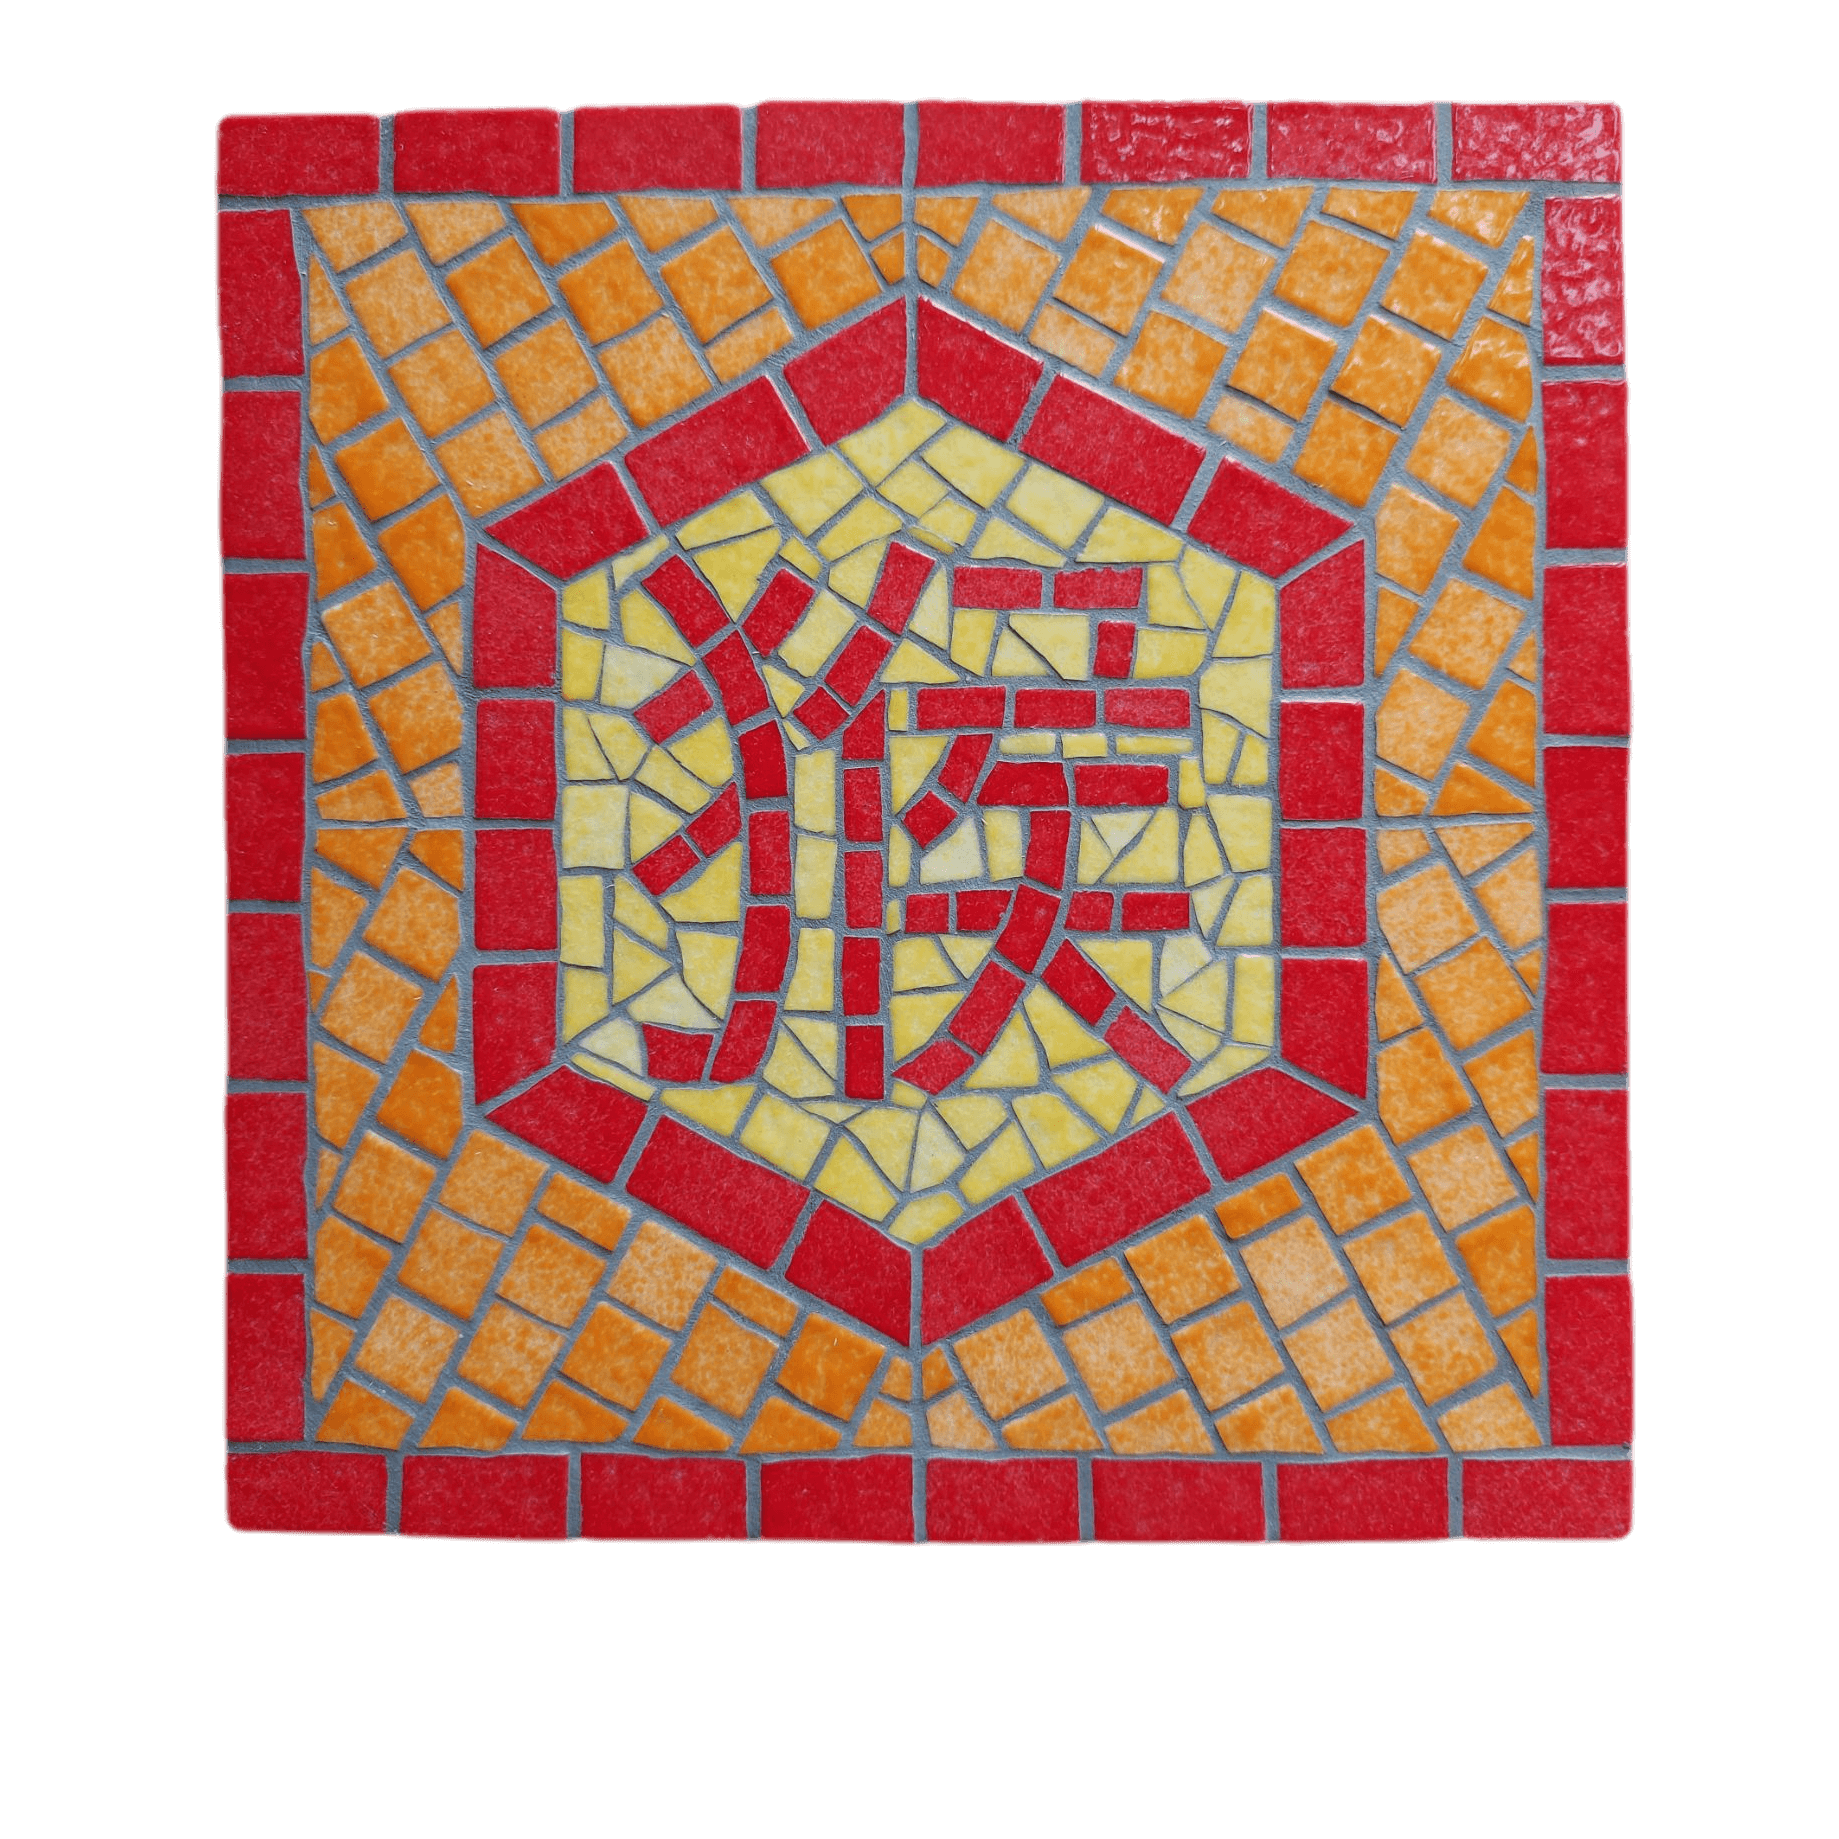 Artisanal Chinese zodiac mosaic, Monkey sign, red line